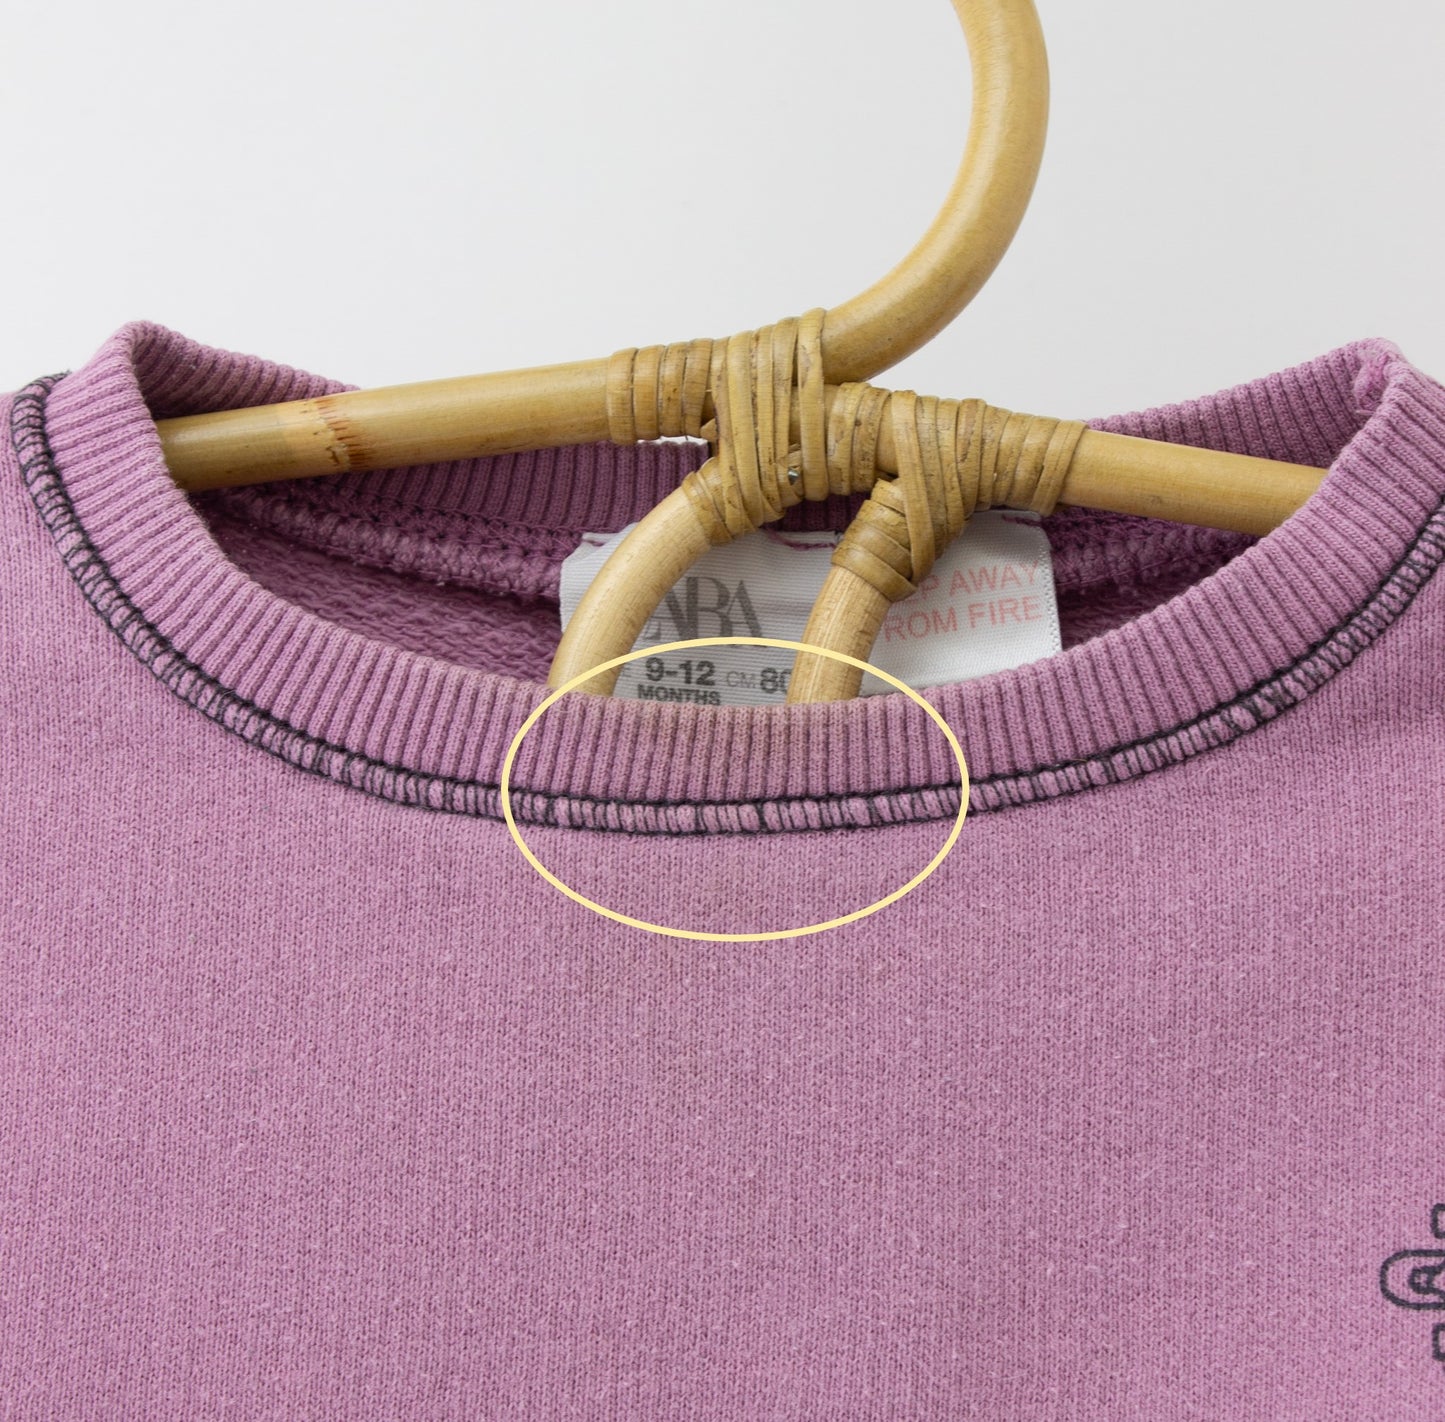 Zara - Sweater (sale)